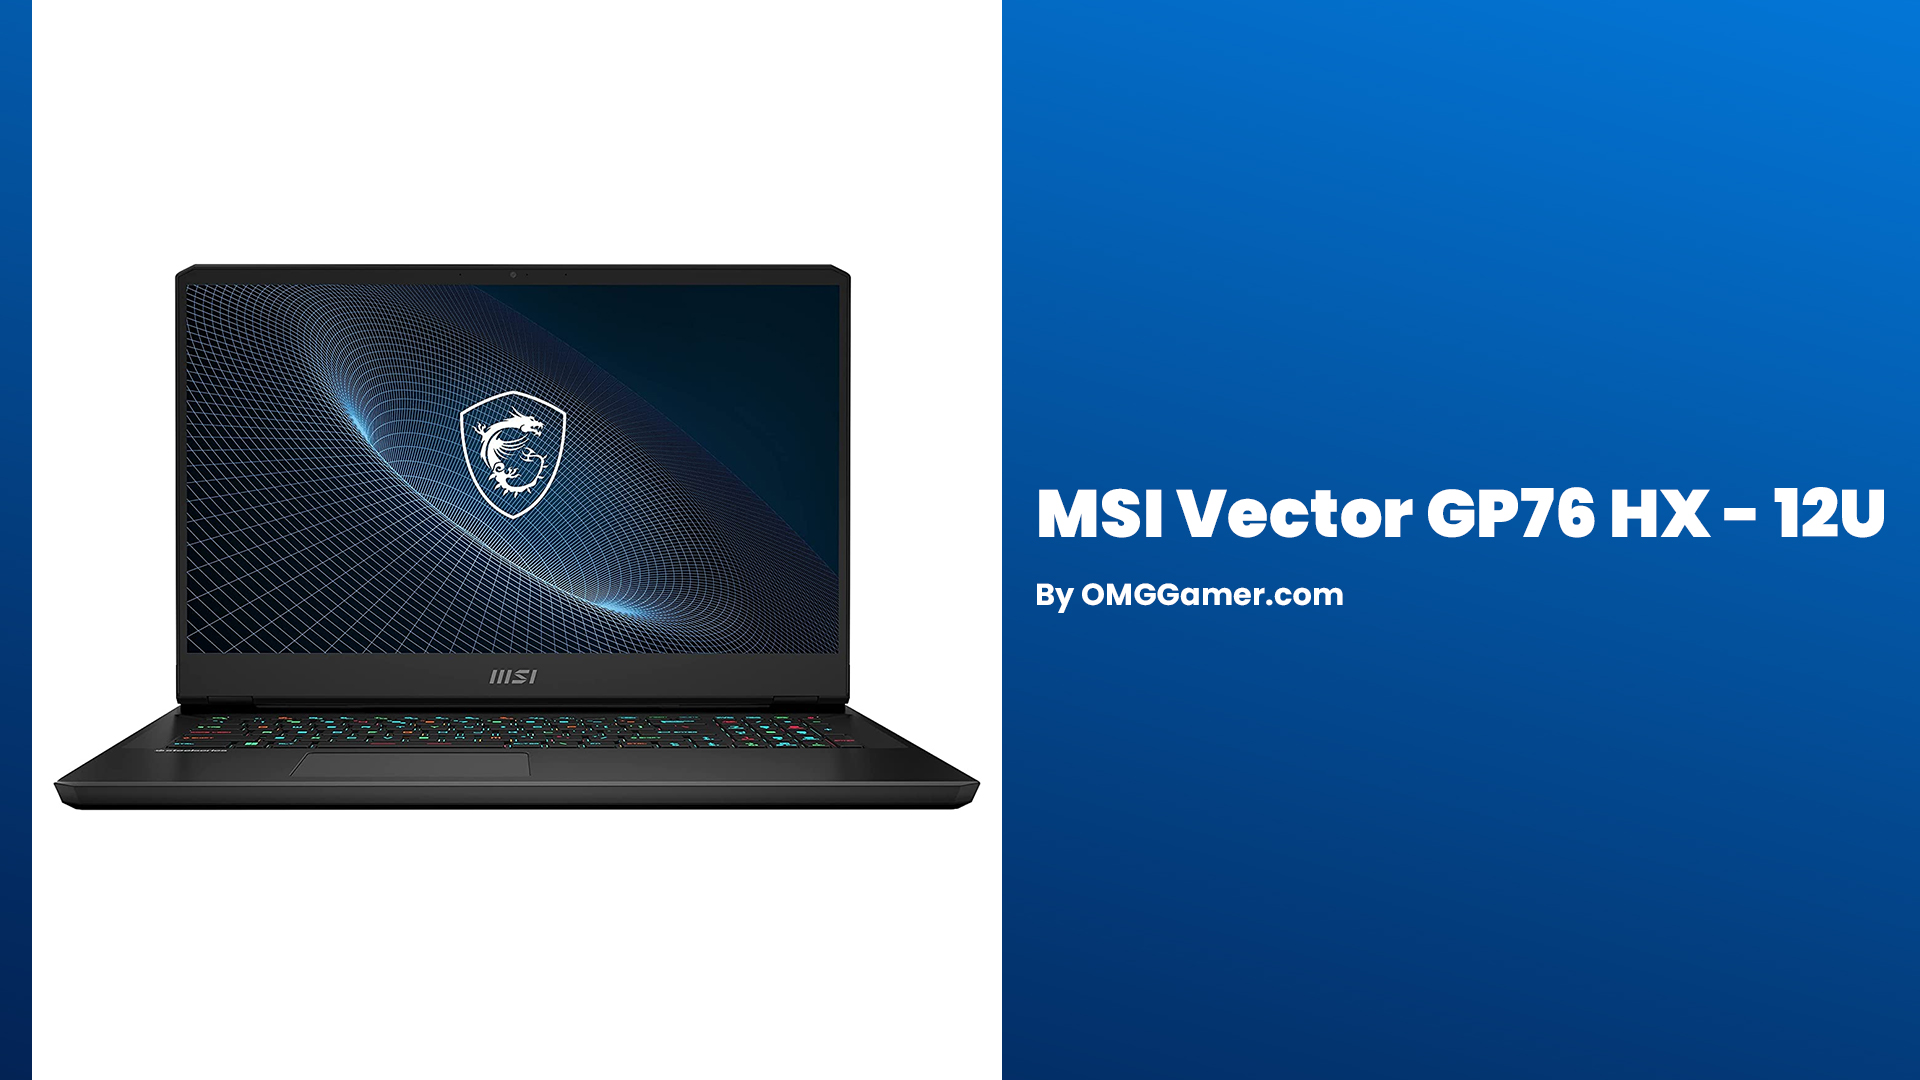 MSI Vector GP76 HX - 12U: Best MSI Gaming Laptops